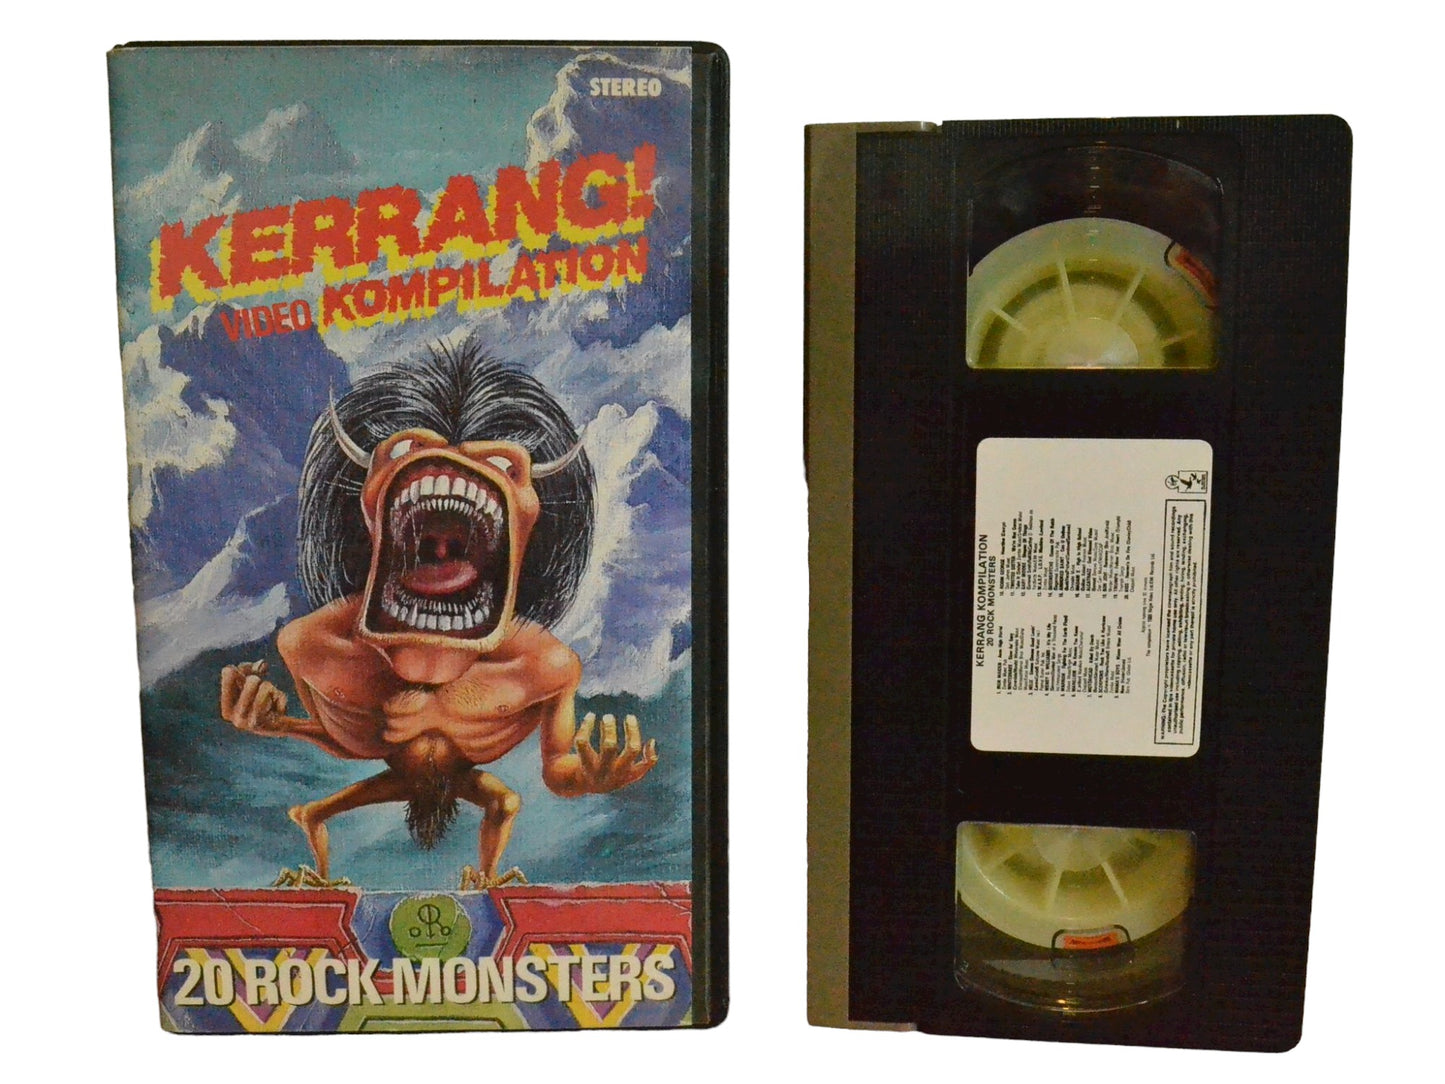 Kerrang! Video Kompilation (20 Rock Monsters) - Virgin Music Video - Music - PAL - VHS